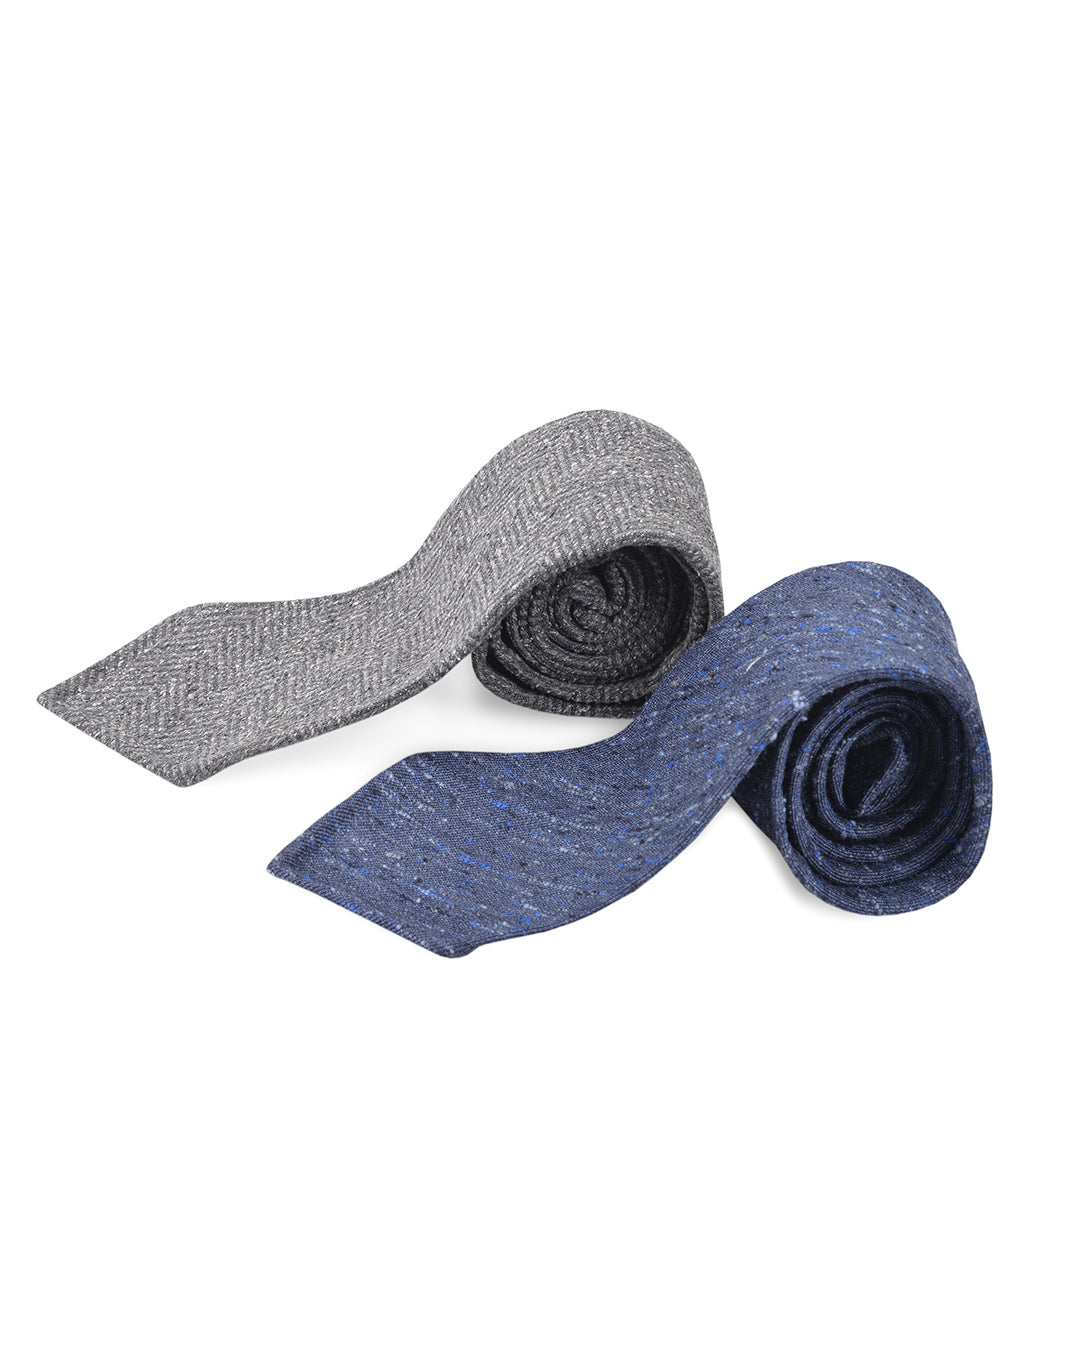 Dark Blue Raw Silk Tie